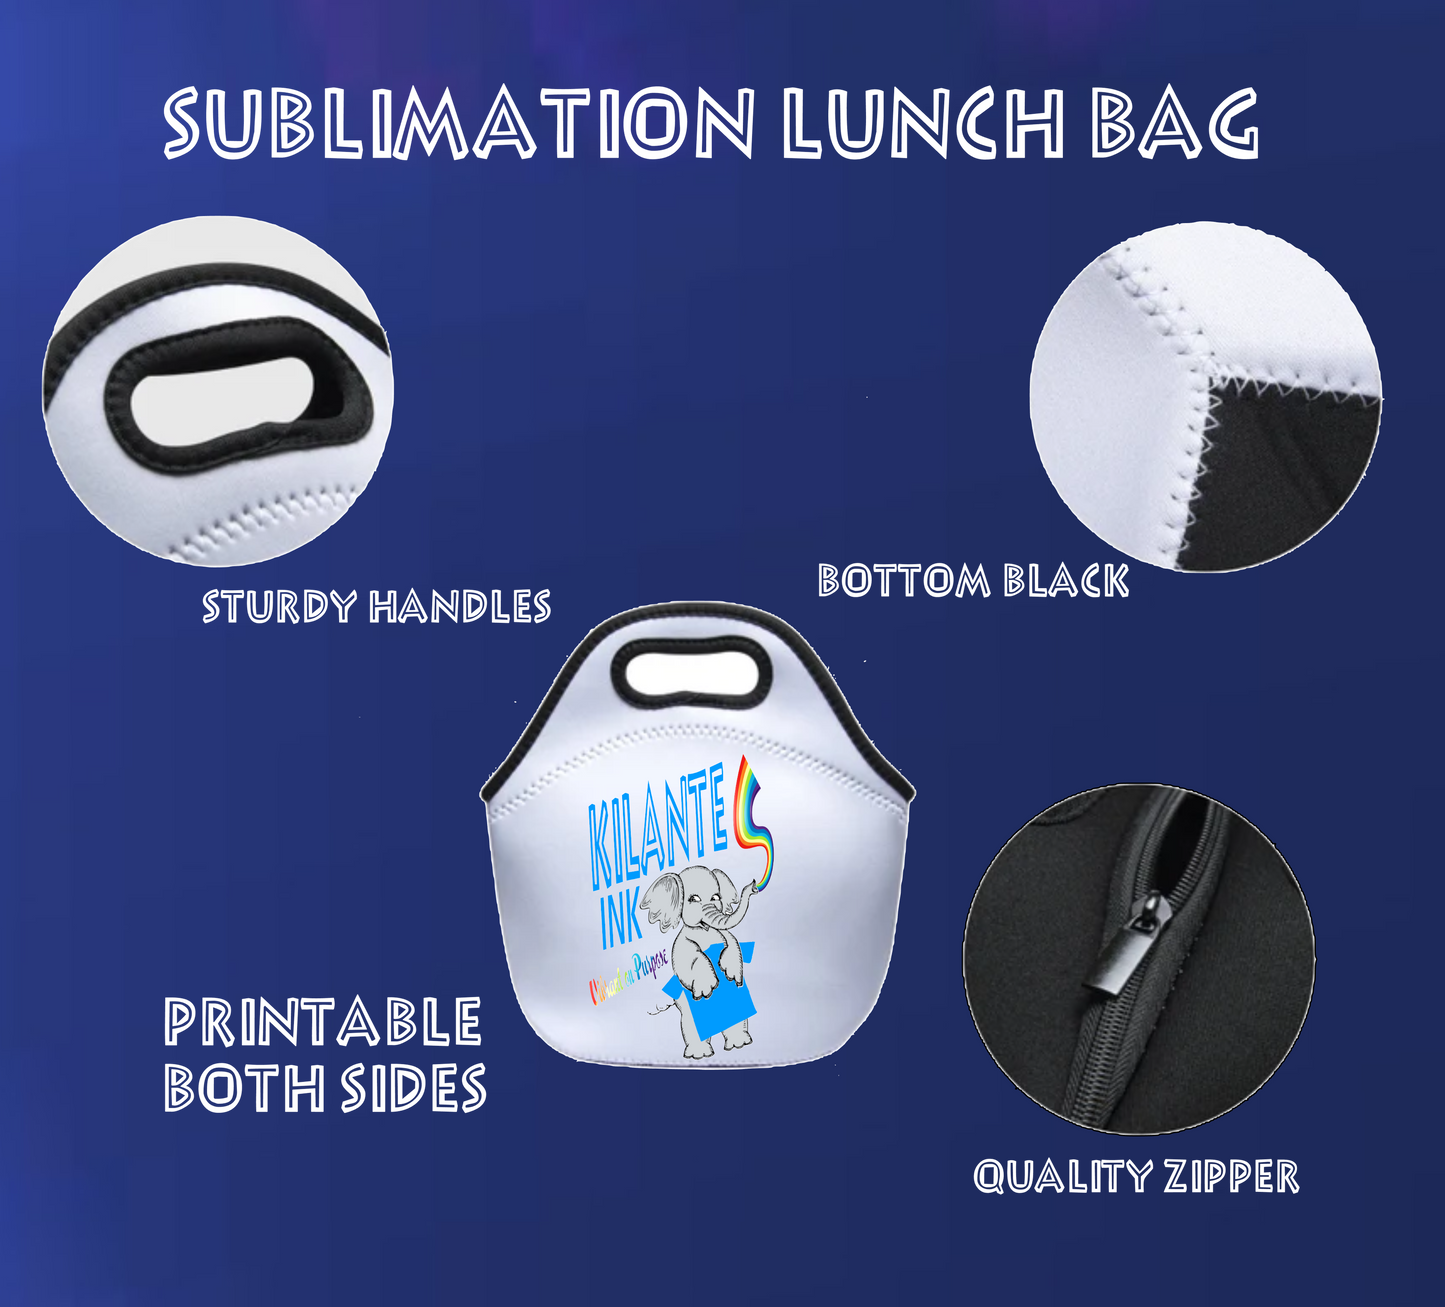 Sublimation Lunch Bag - Kilante Ink